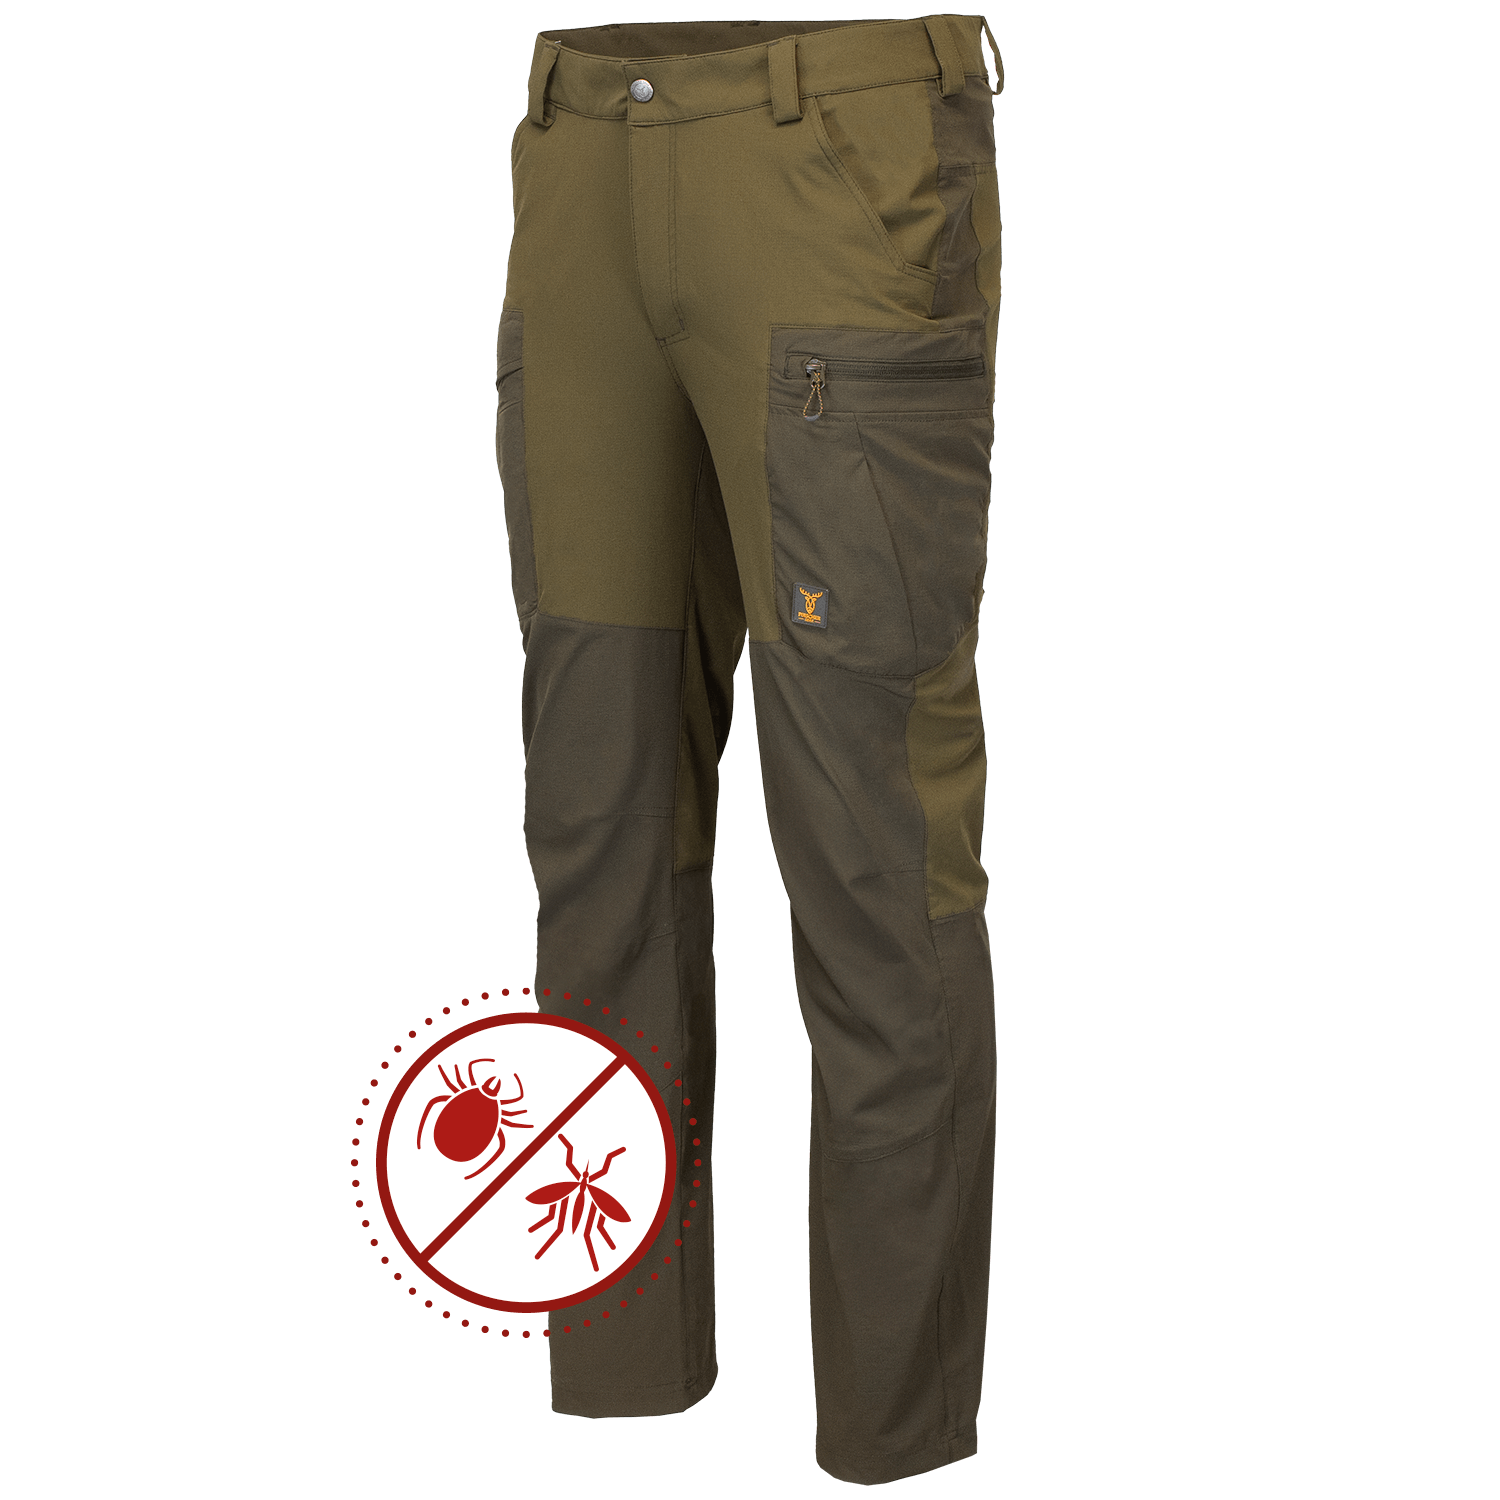 Pirscher Gear Ripstop Tanatex Pants - Summer Hunting Clothing